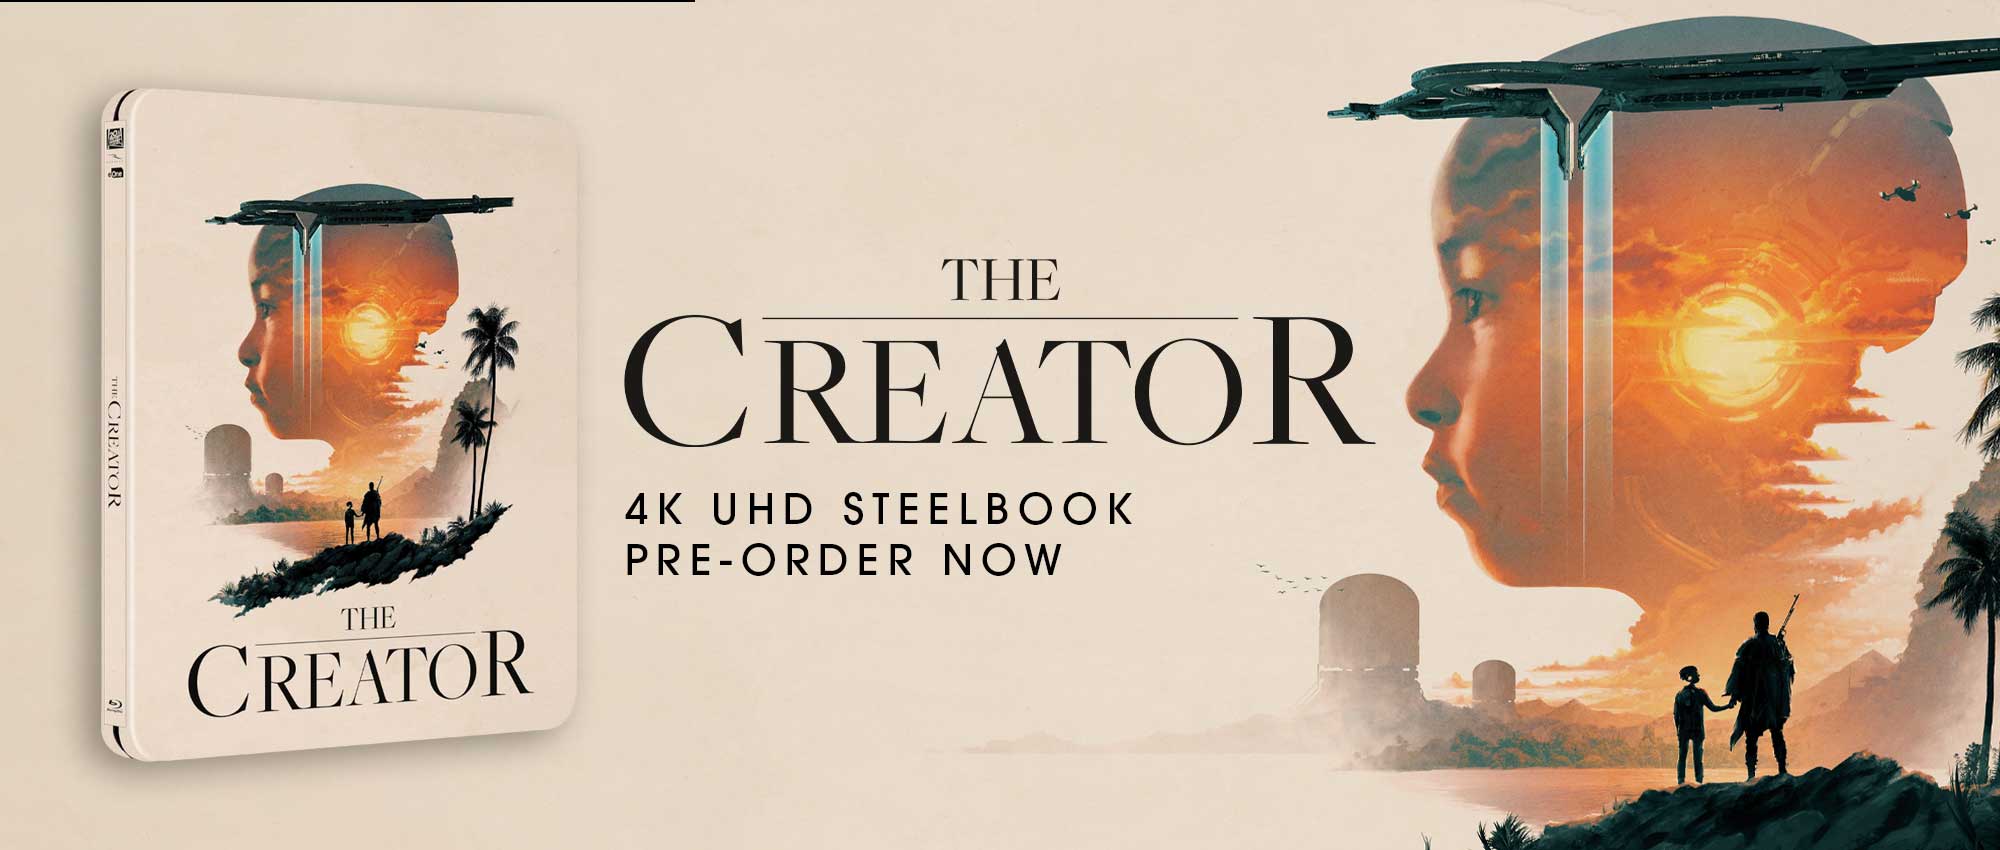 Matt Ferguson on X: The Creator. 4K UHD steelbook designed by me